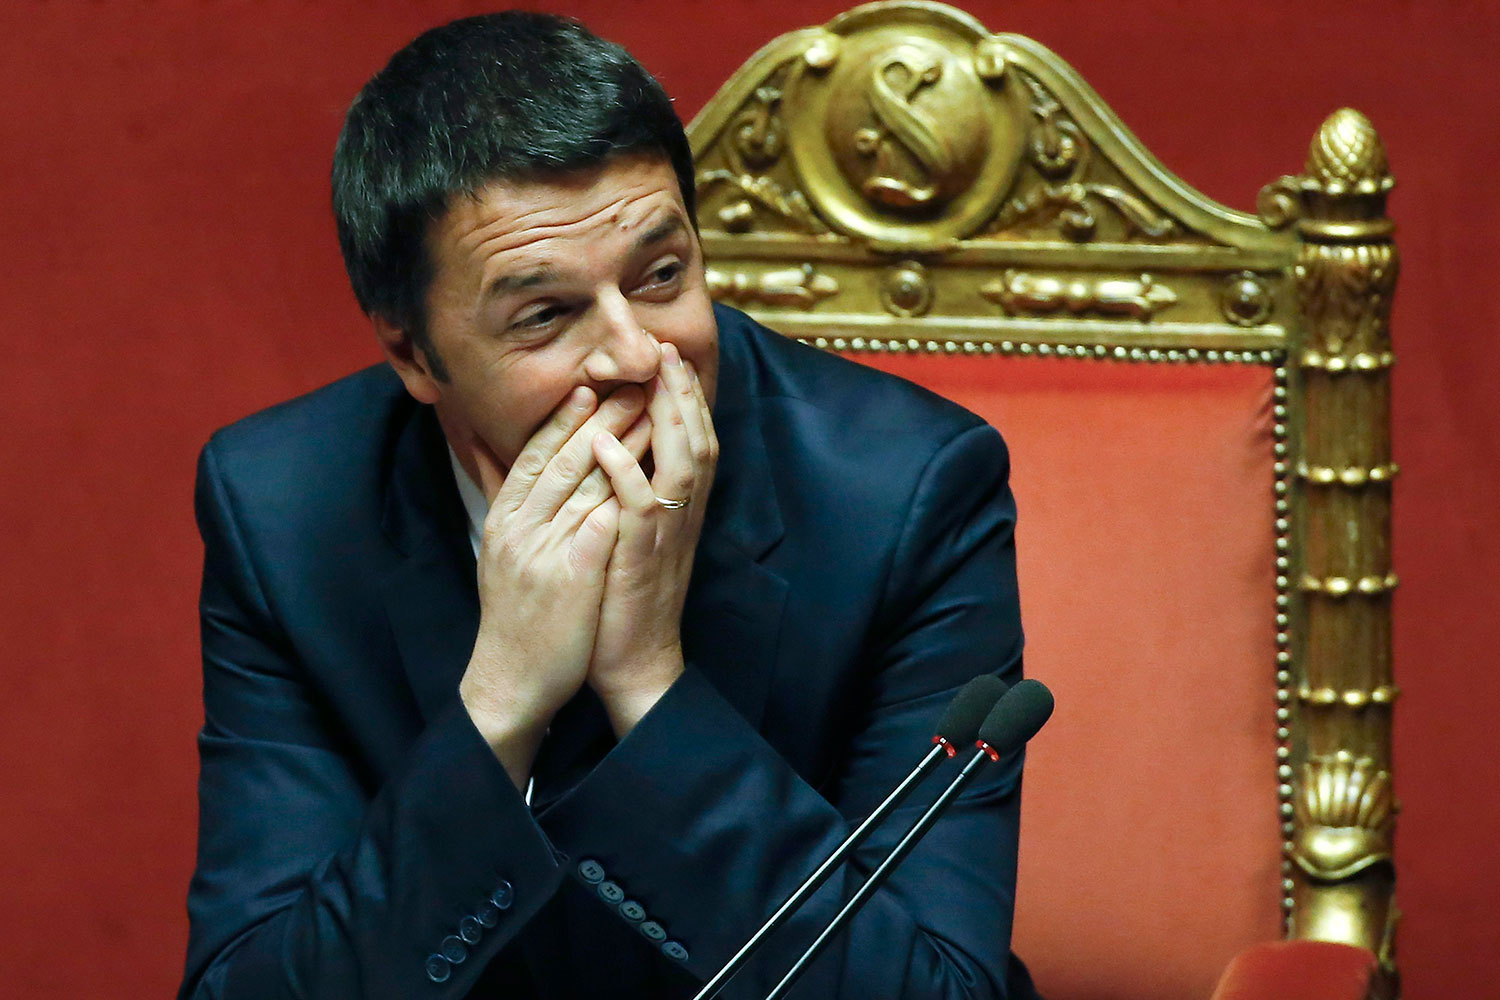 El primer ministro italiano, Matteo Renzi, insiste en eliminar el Senado